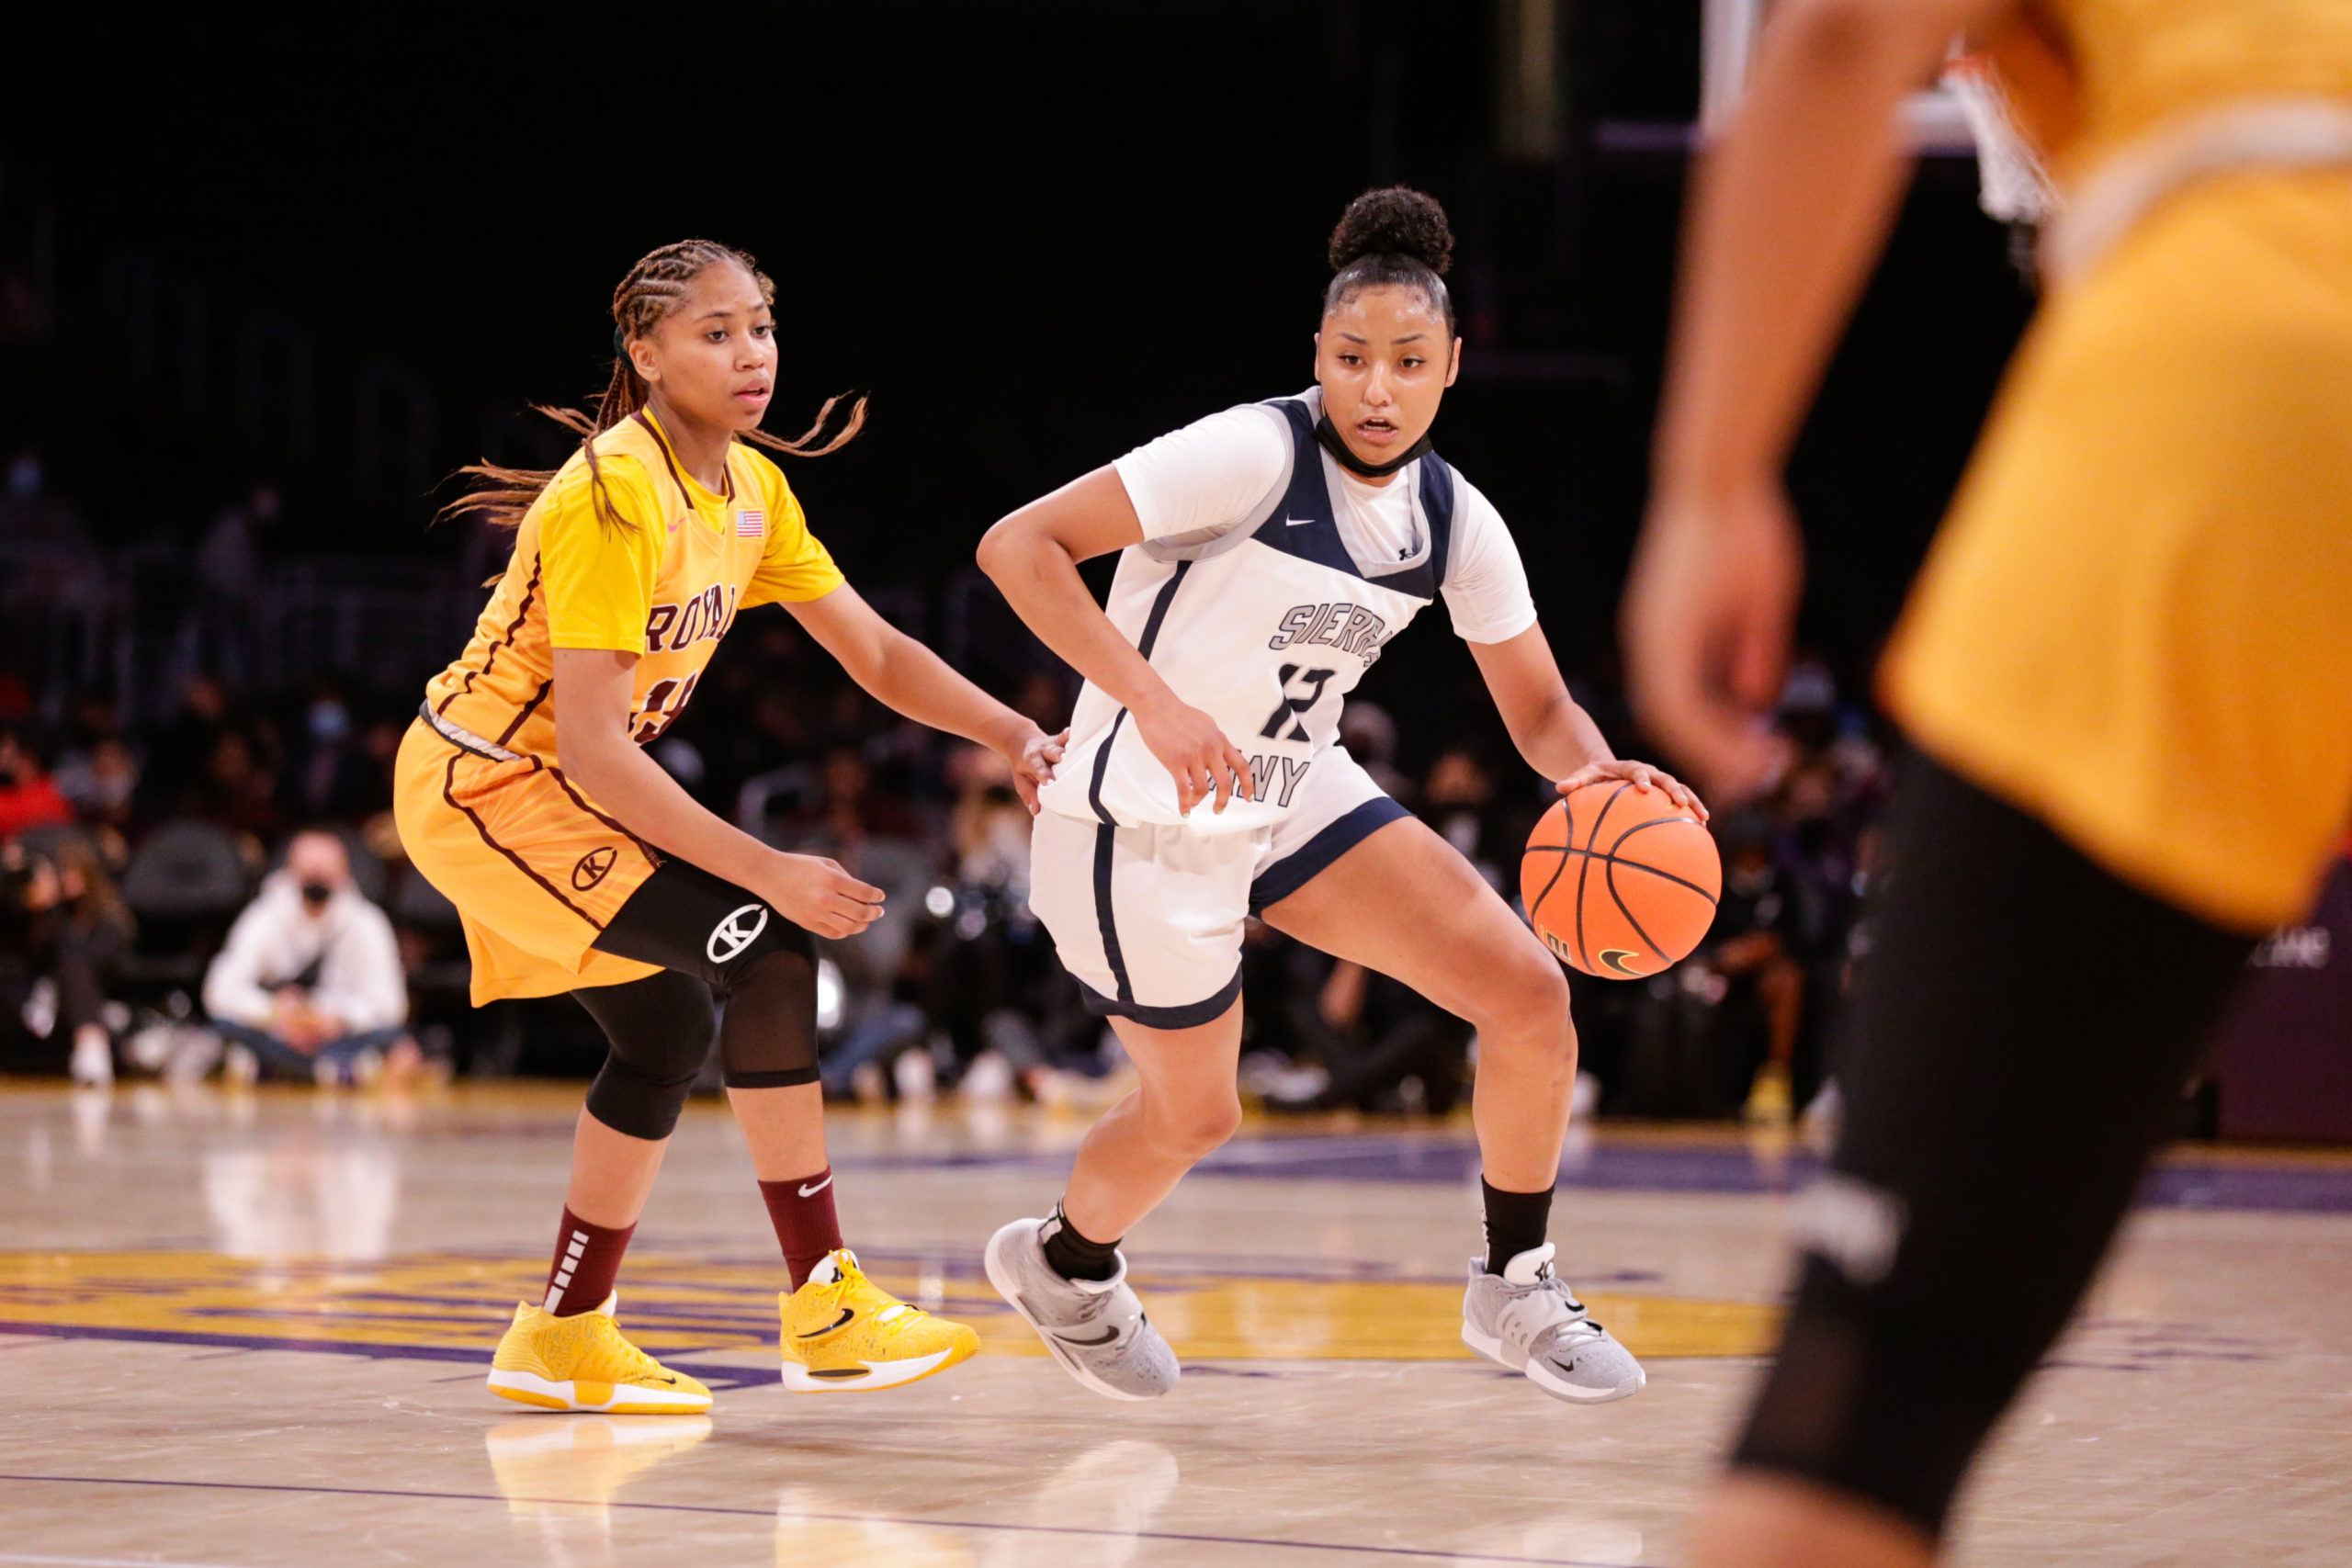 25 players to watch in Michigan's girls high school basketball